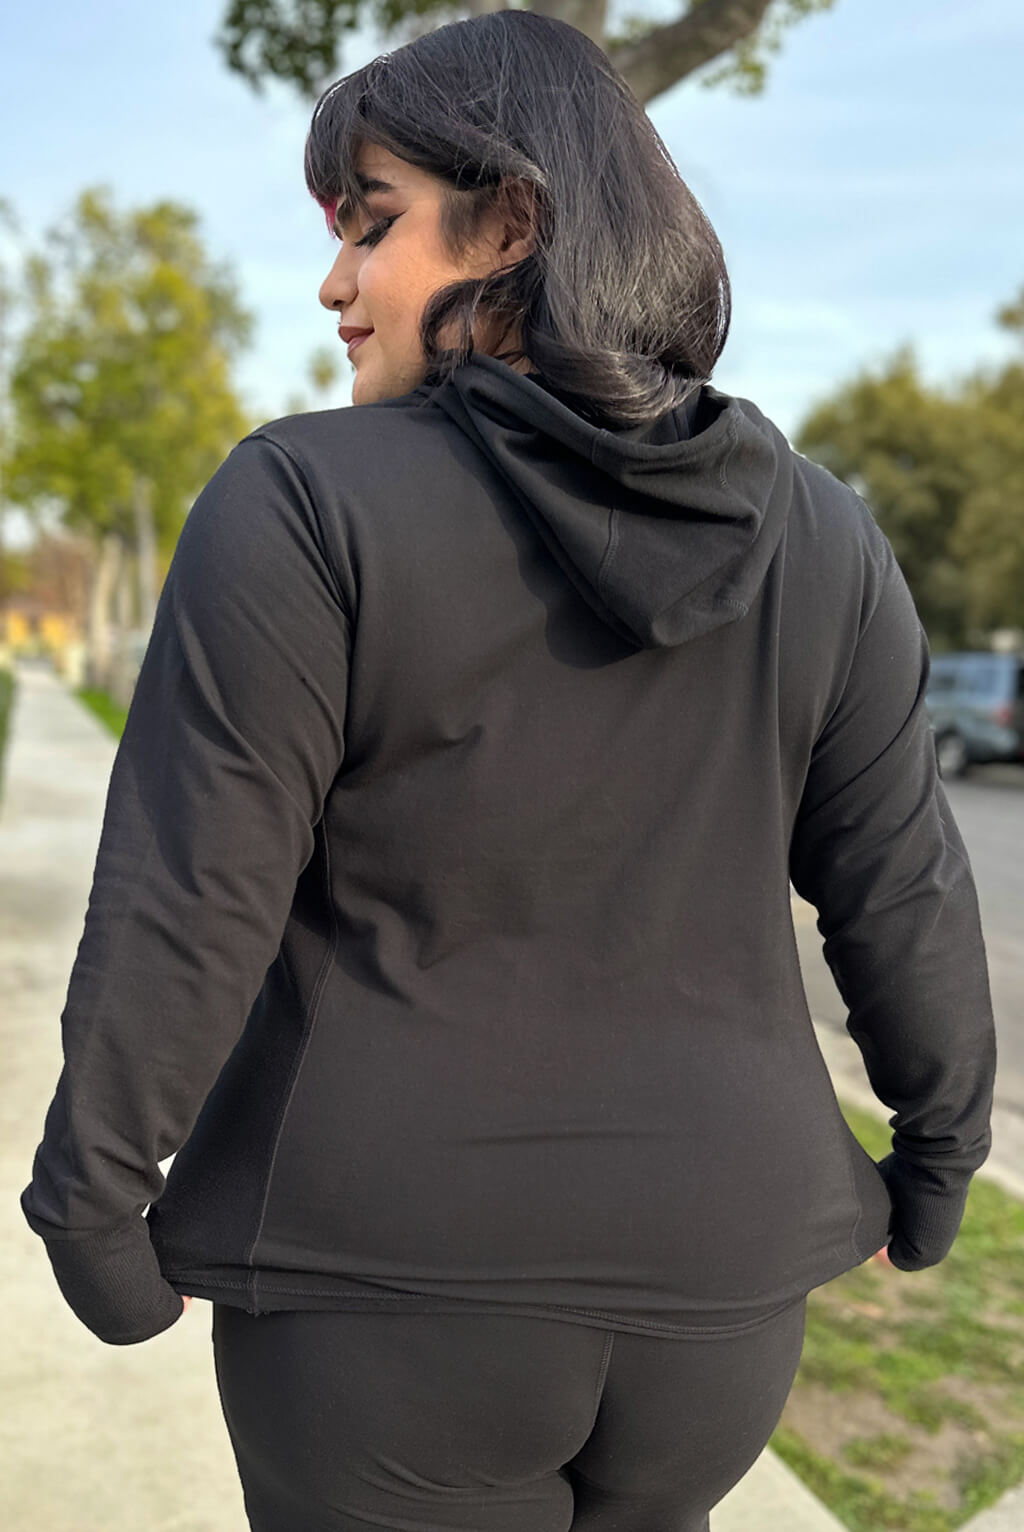 Terry Long Sleeve Plus Size Hoodies & Sweatshirts for Women 2X Size